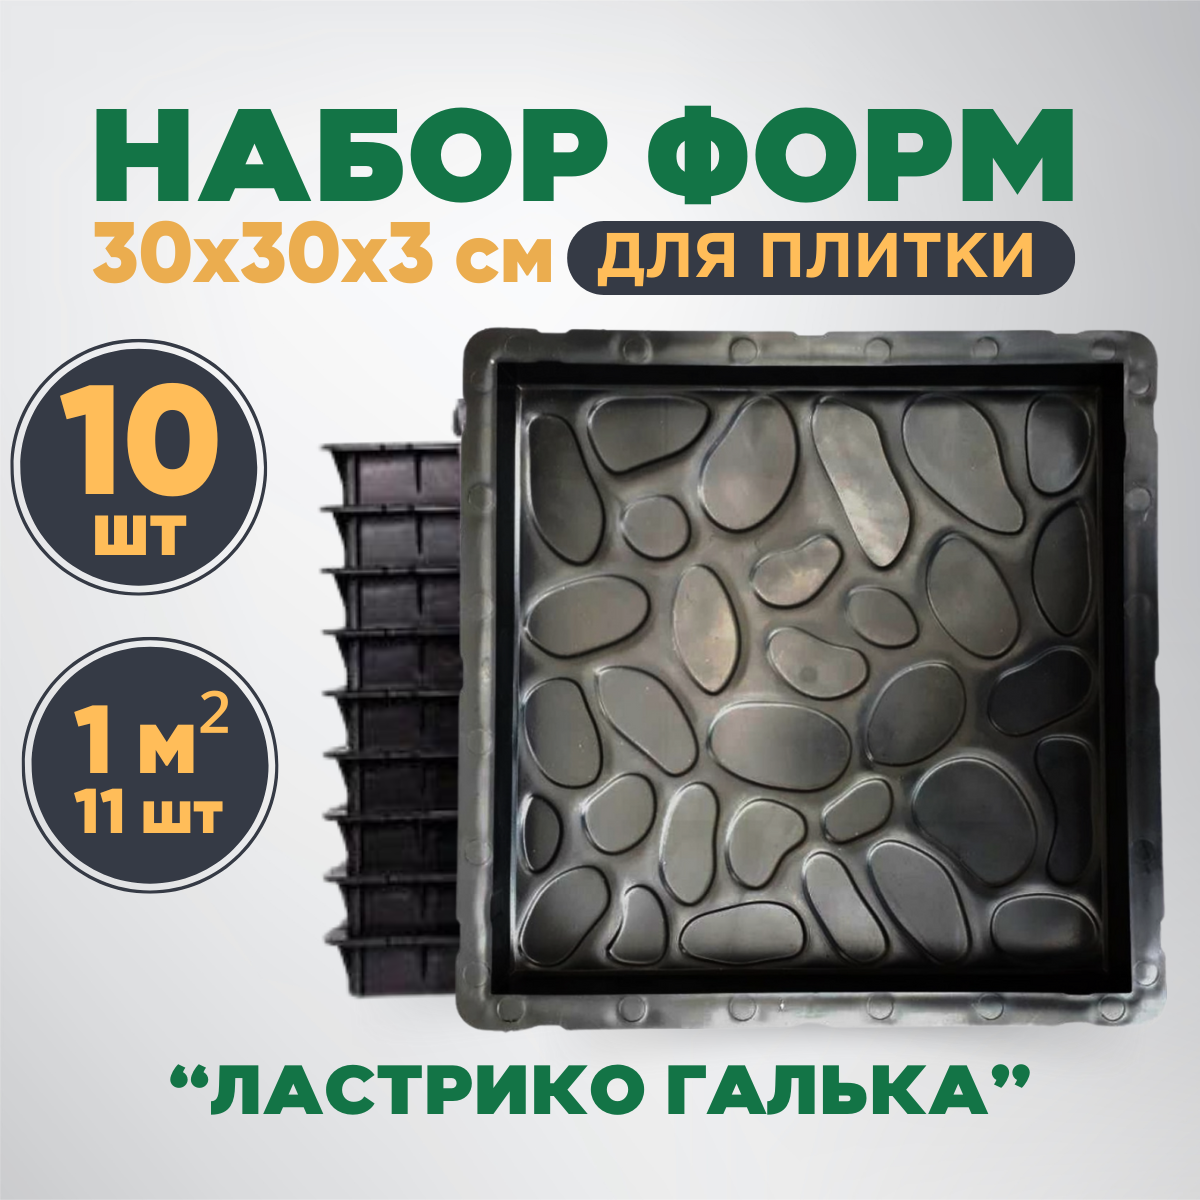 Формы для тротуарной плитки "Ластрико Галька" 300х300х30 мм комплект 10 шт